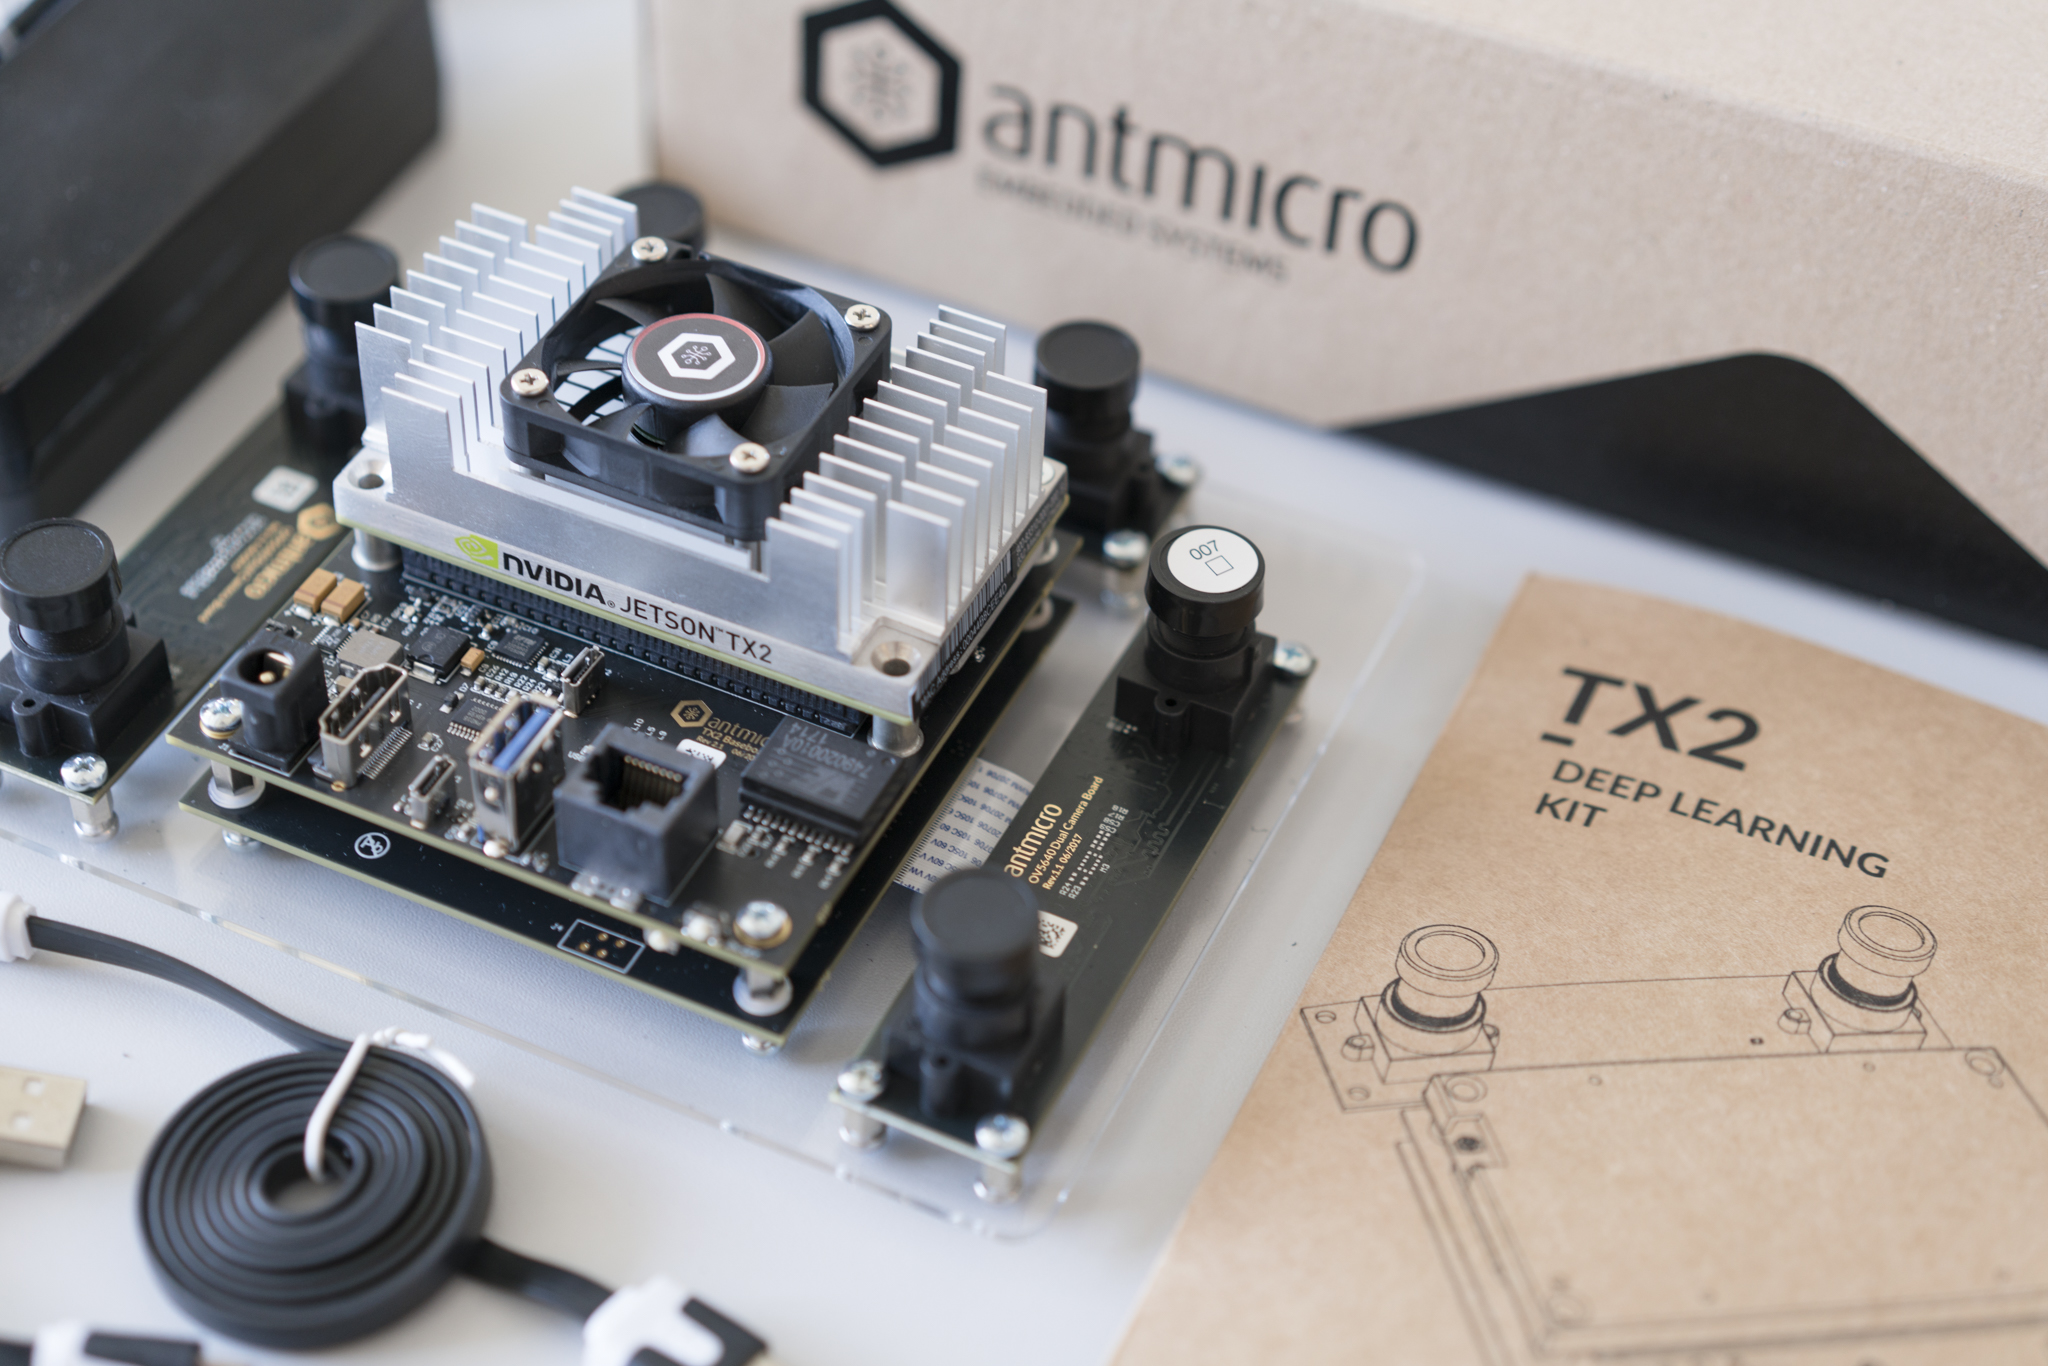 Antmicro TX2 Deep Learning kit